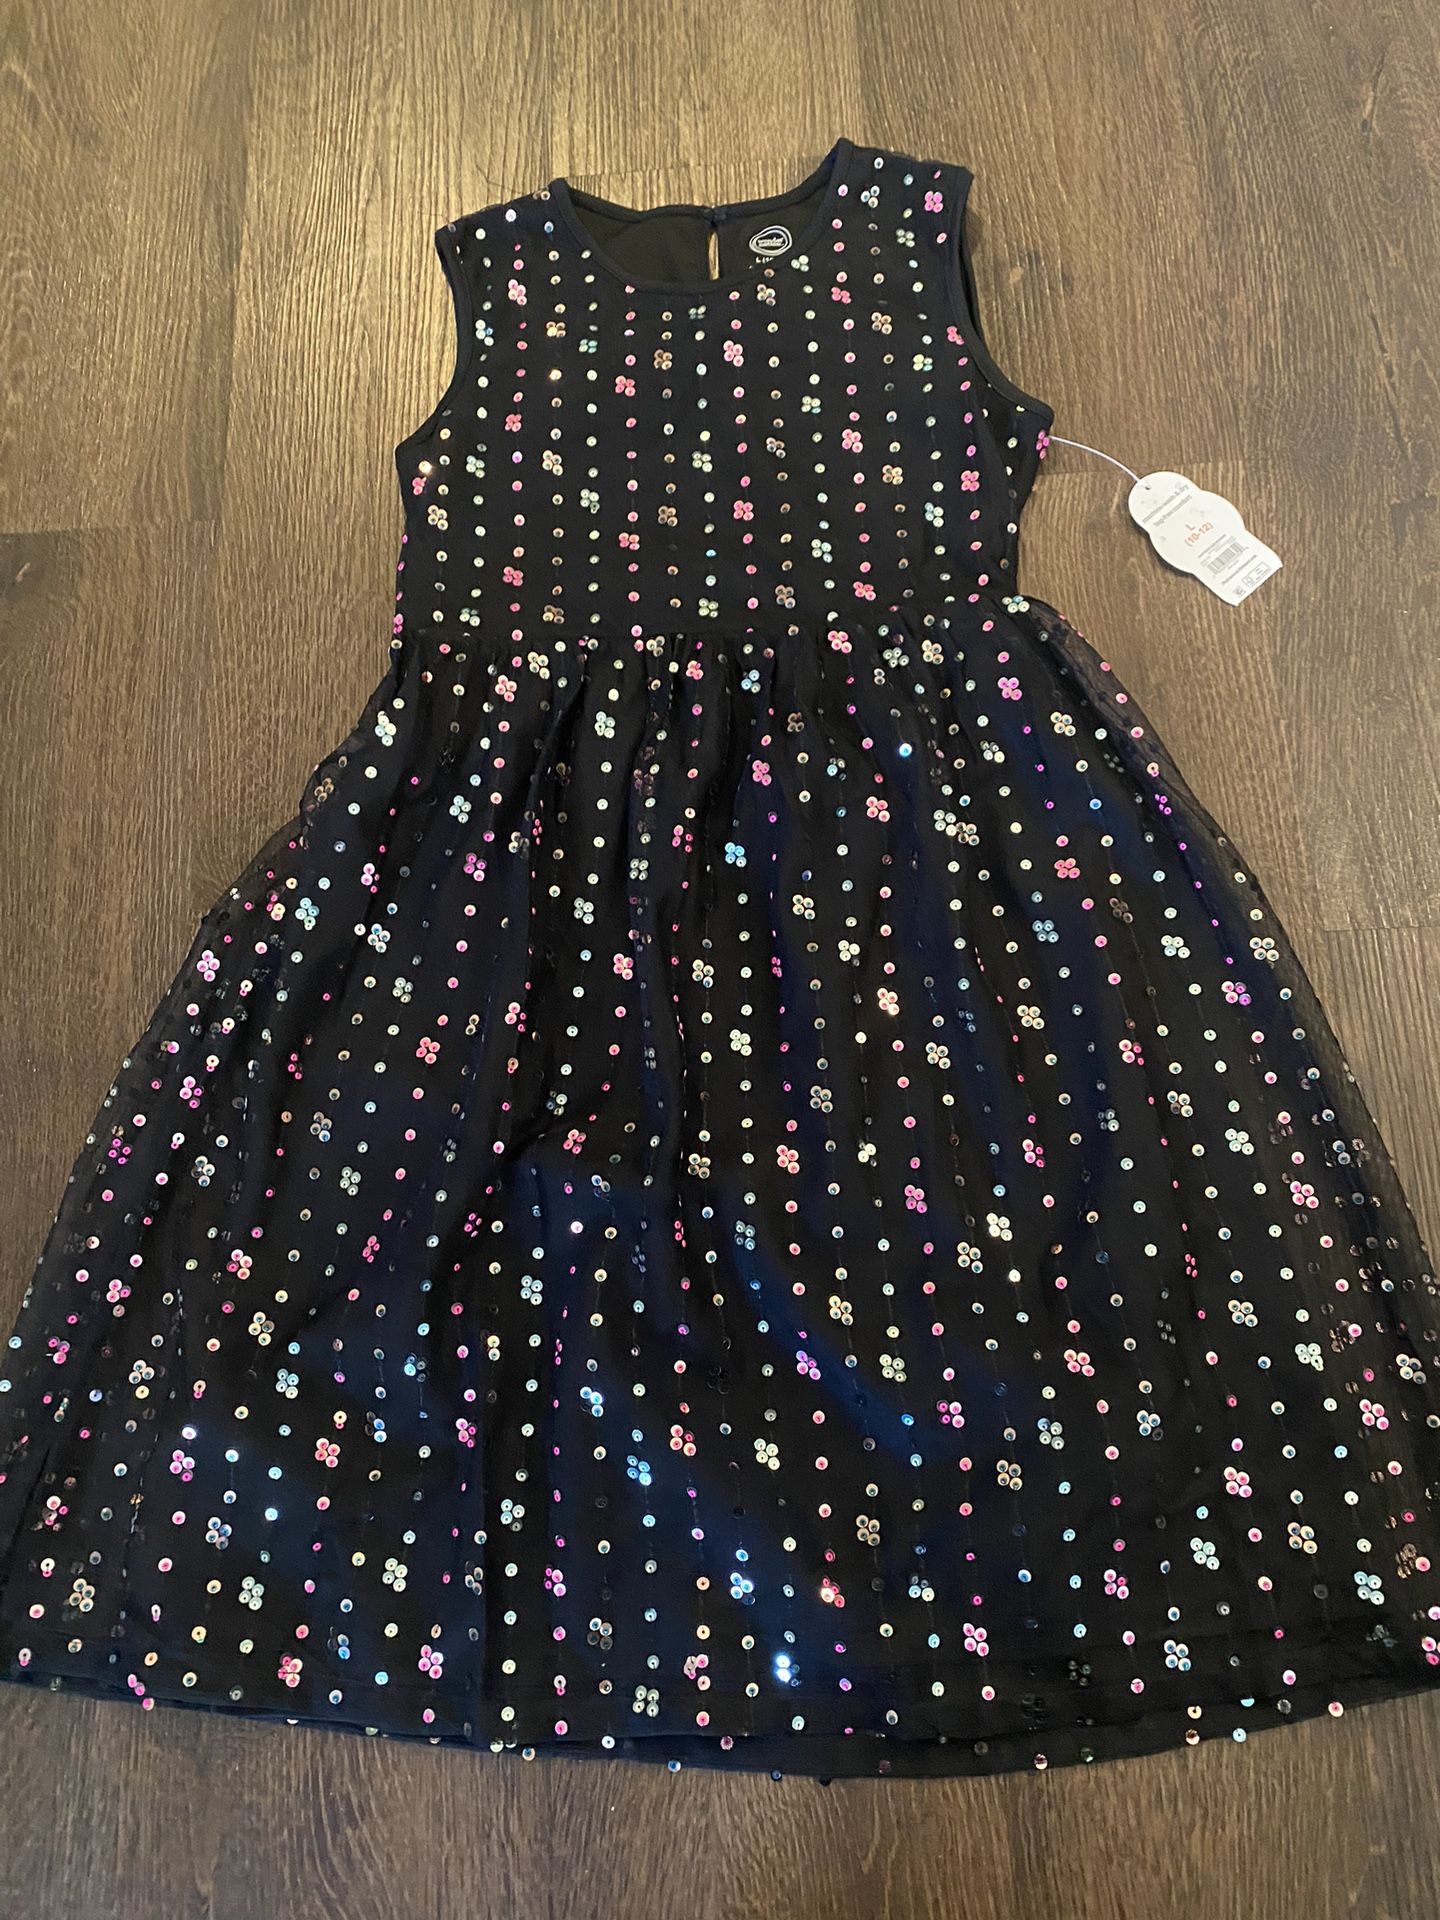 NEW Girls Black Sparkle Dress Size 10/12 By Wonder Nation #6